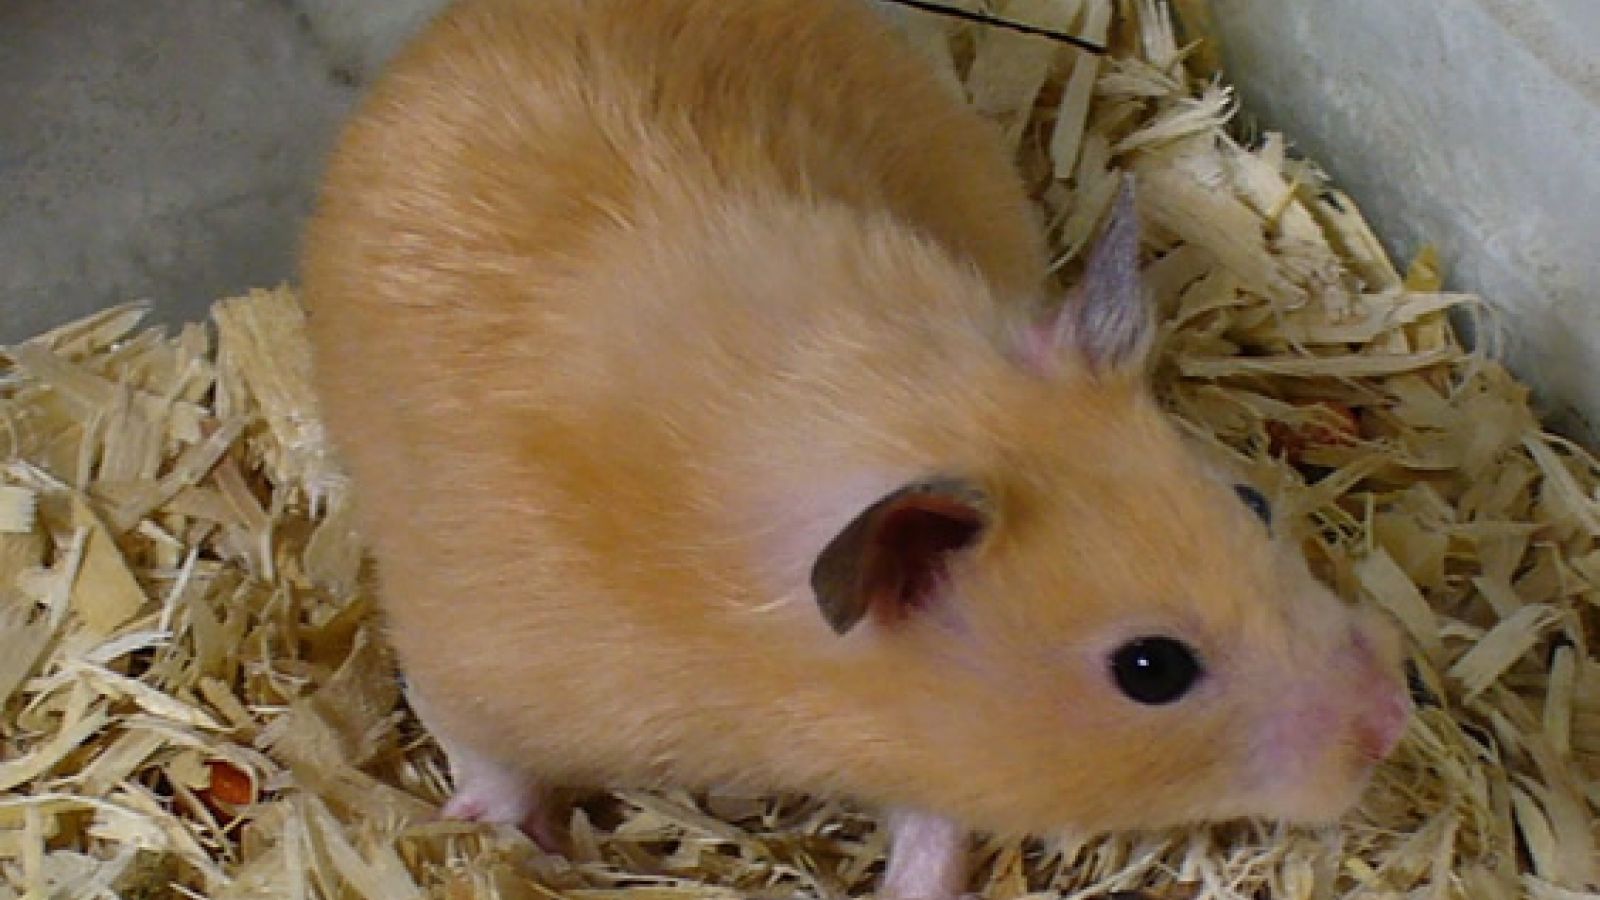 Syrian or Golden Hamster Care : Syrian or Golden Hamster Life Span